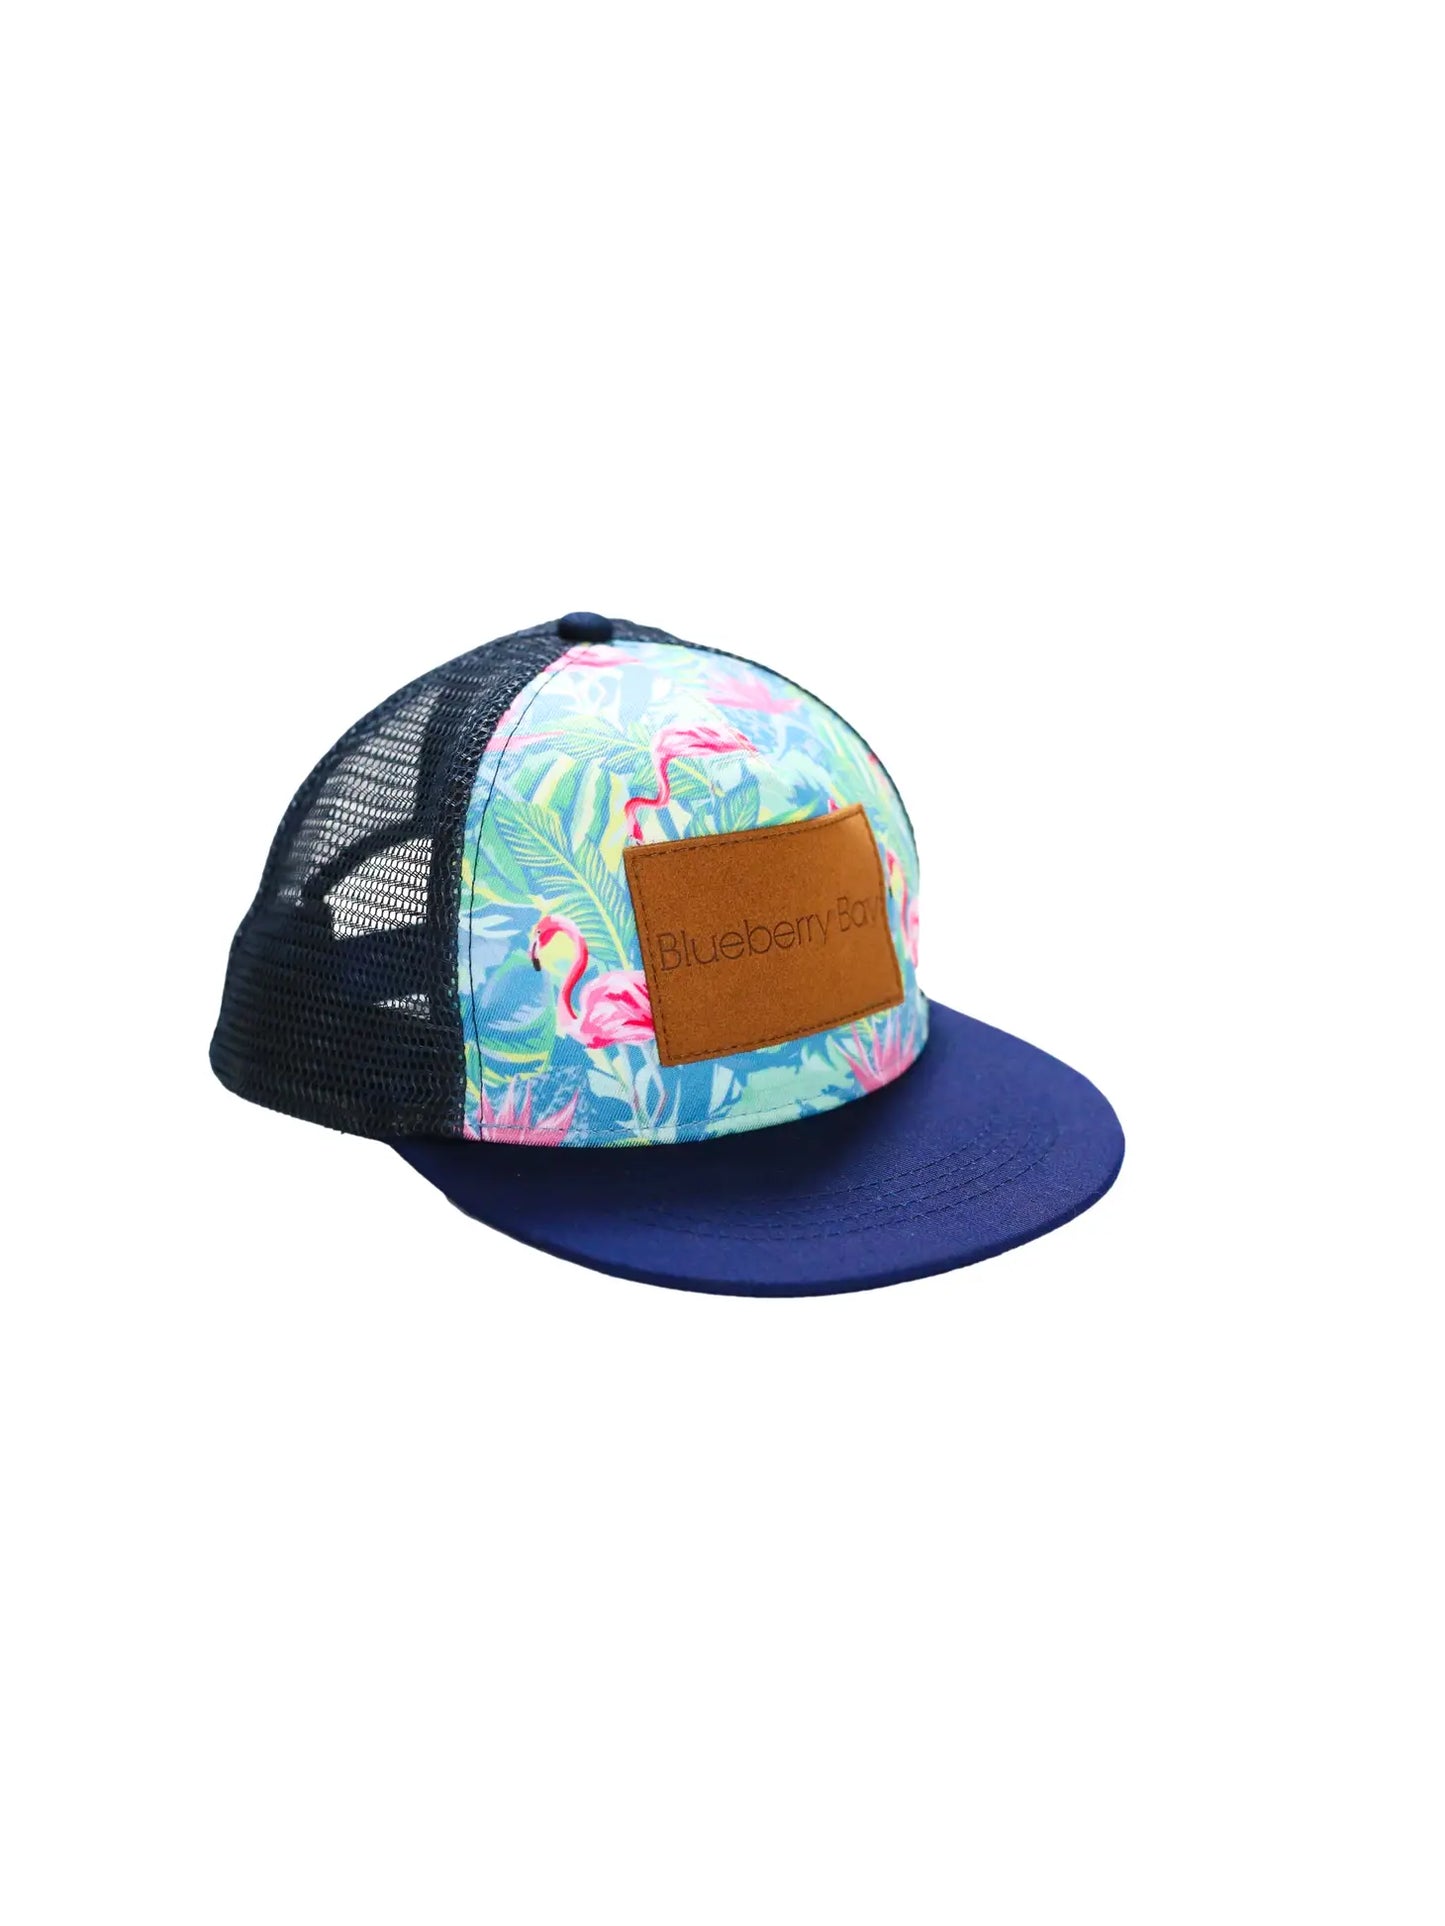 Hats- Blueberry Bay Trucker Hats